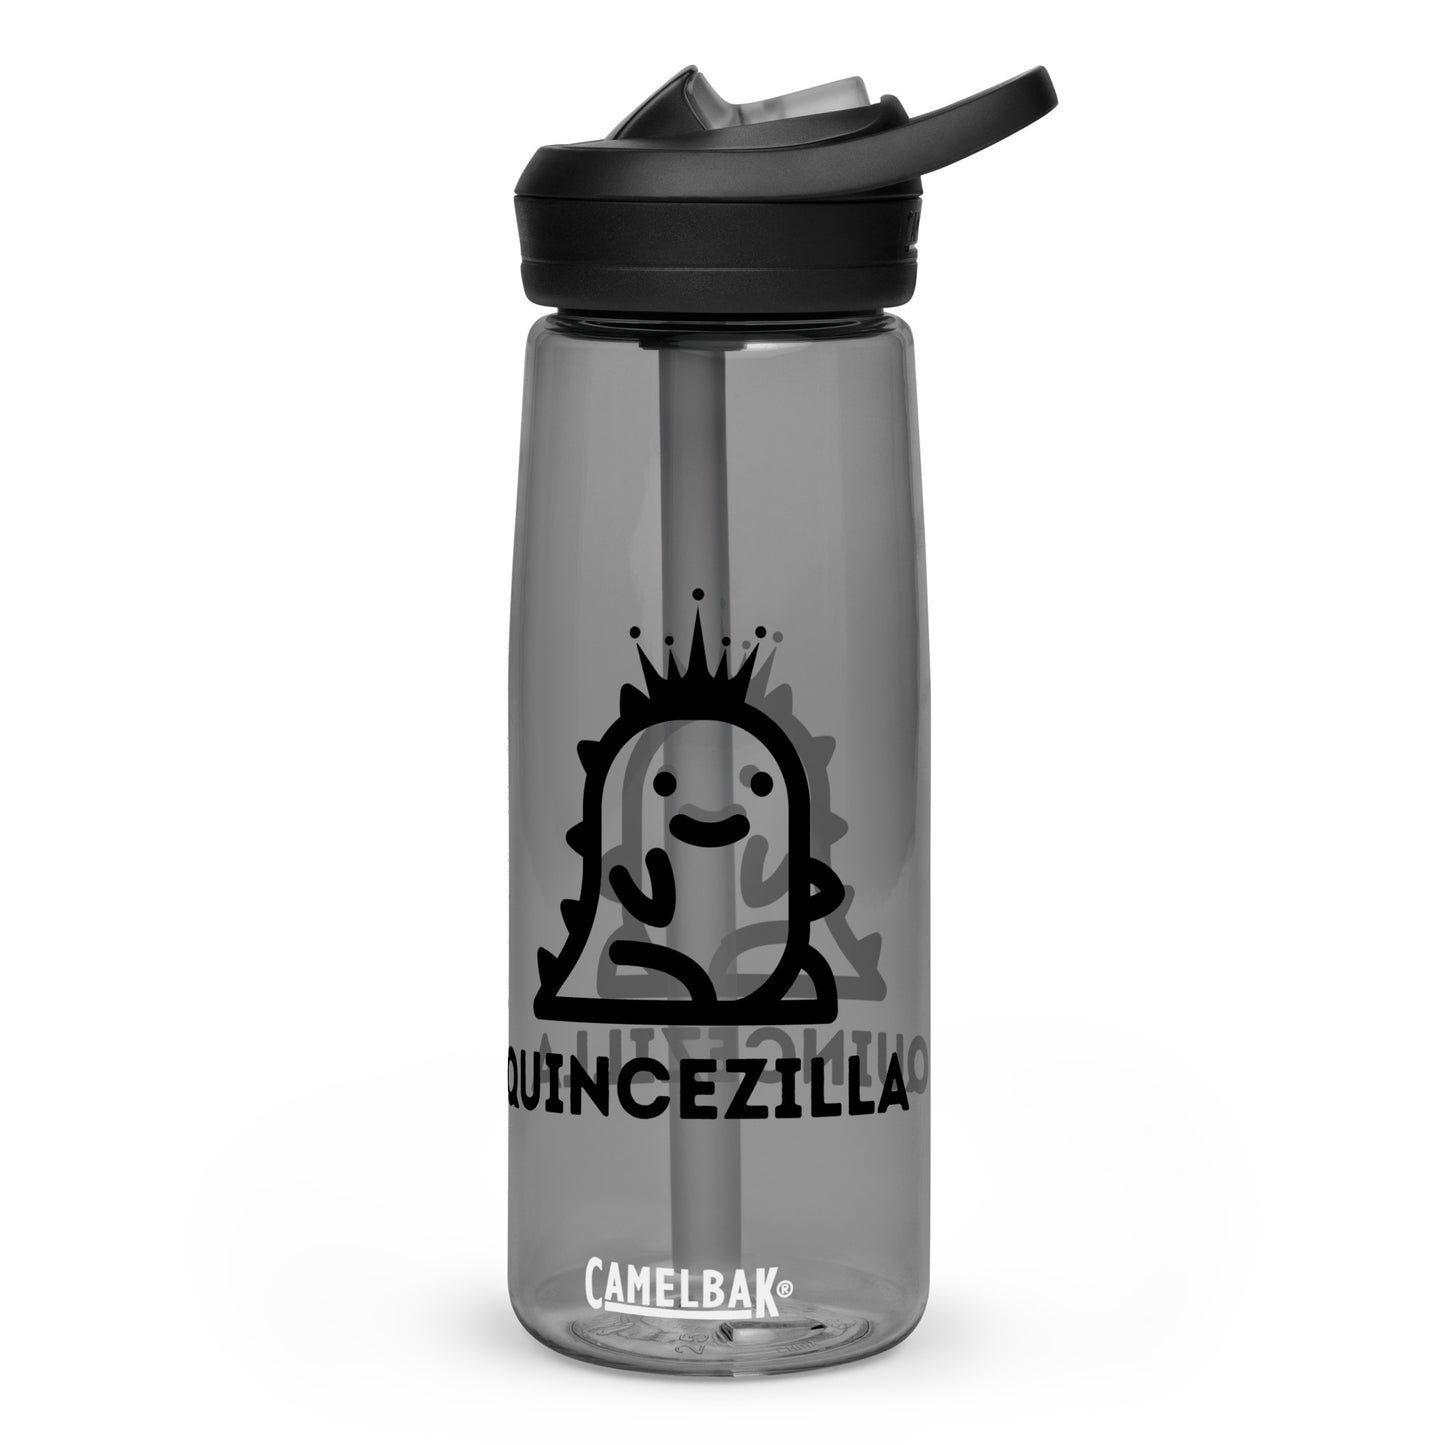 Quincezilla Water Bottle